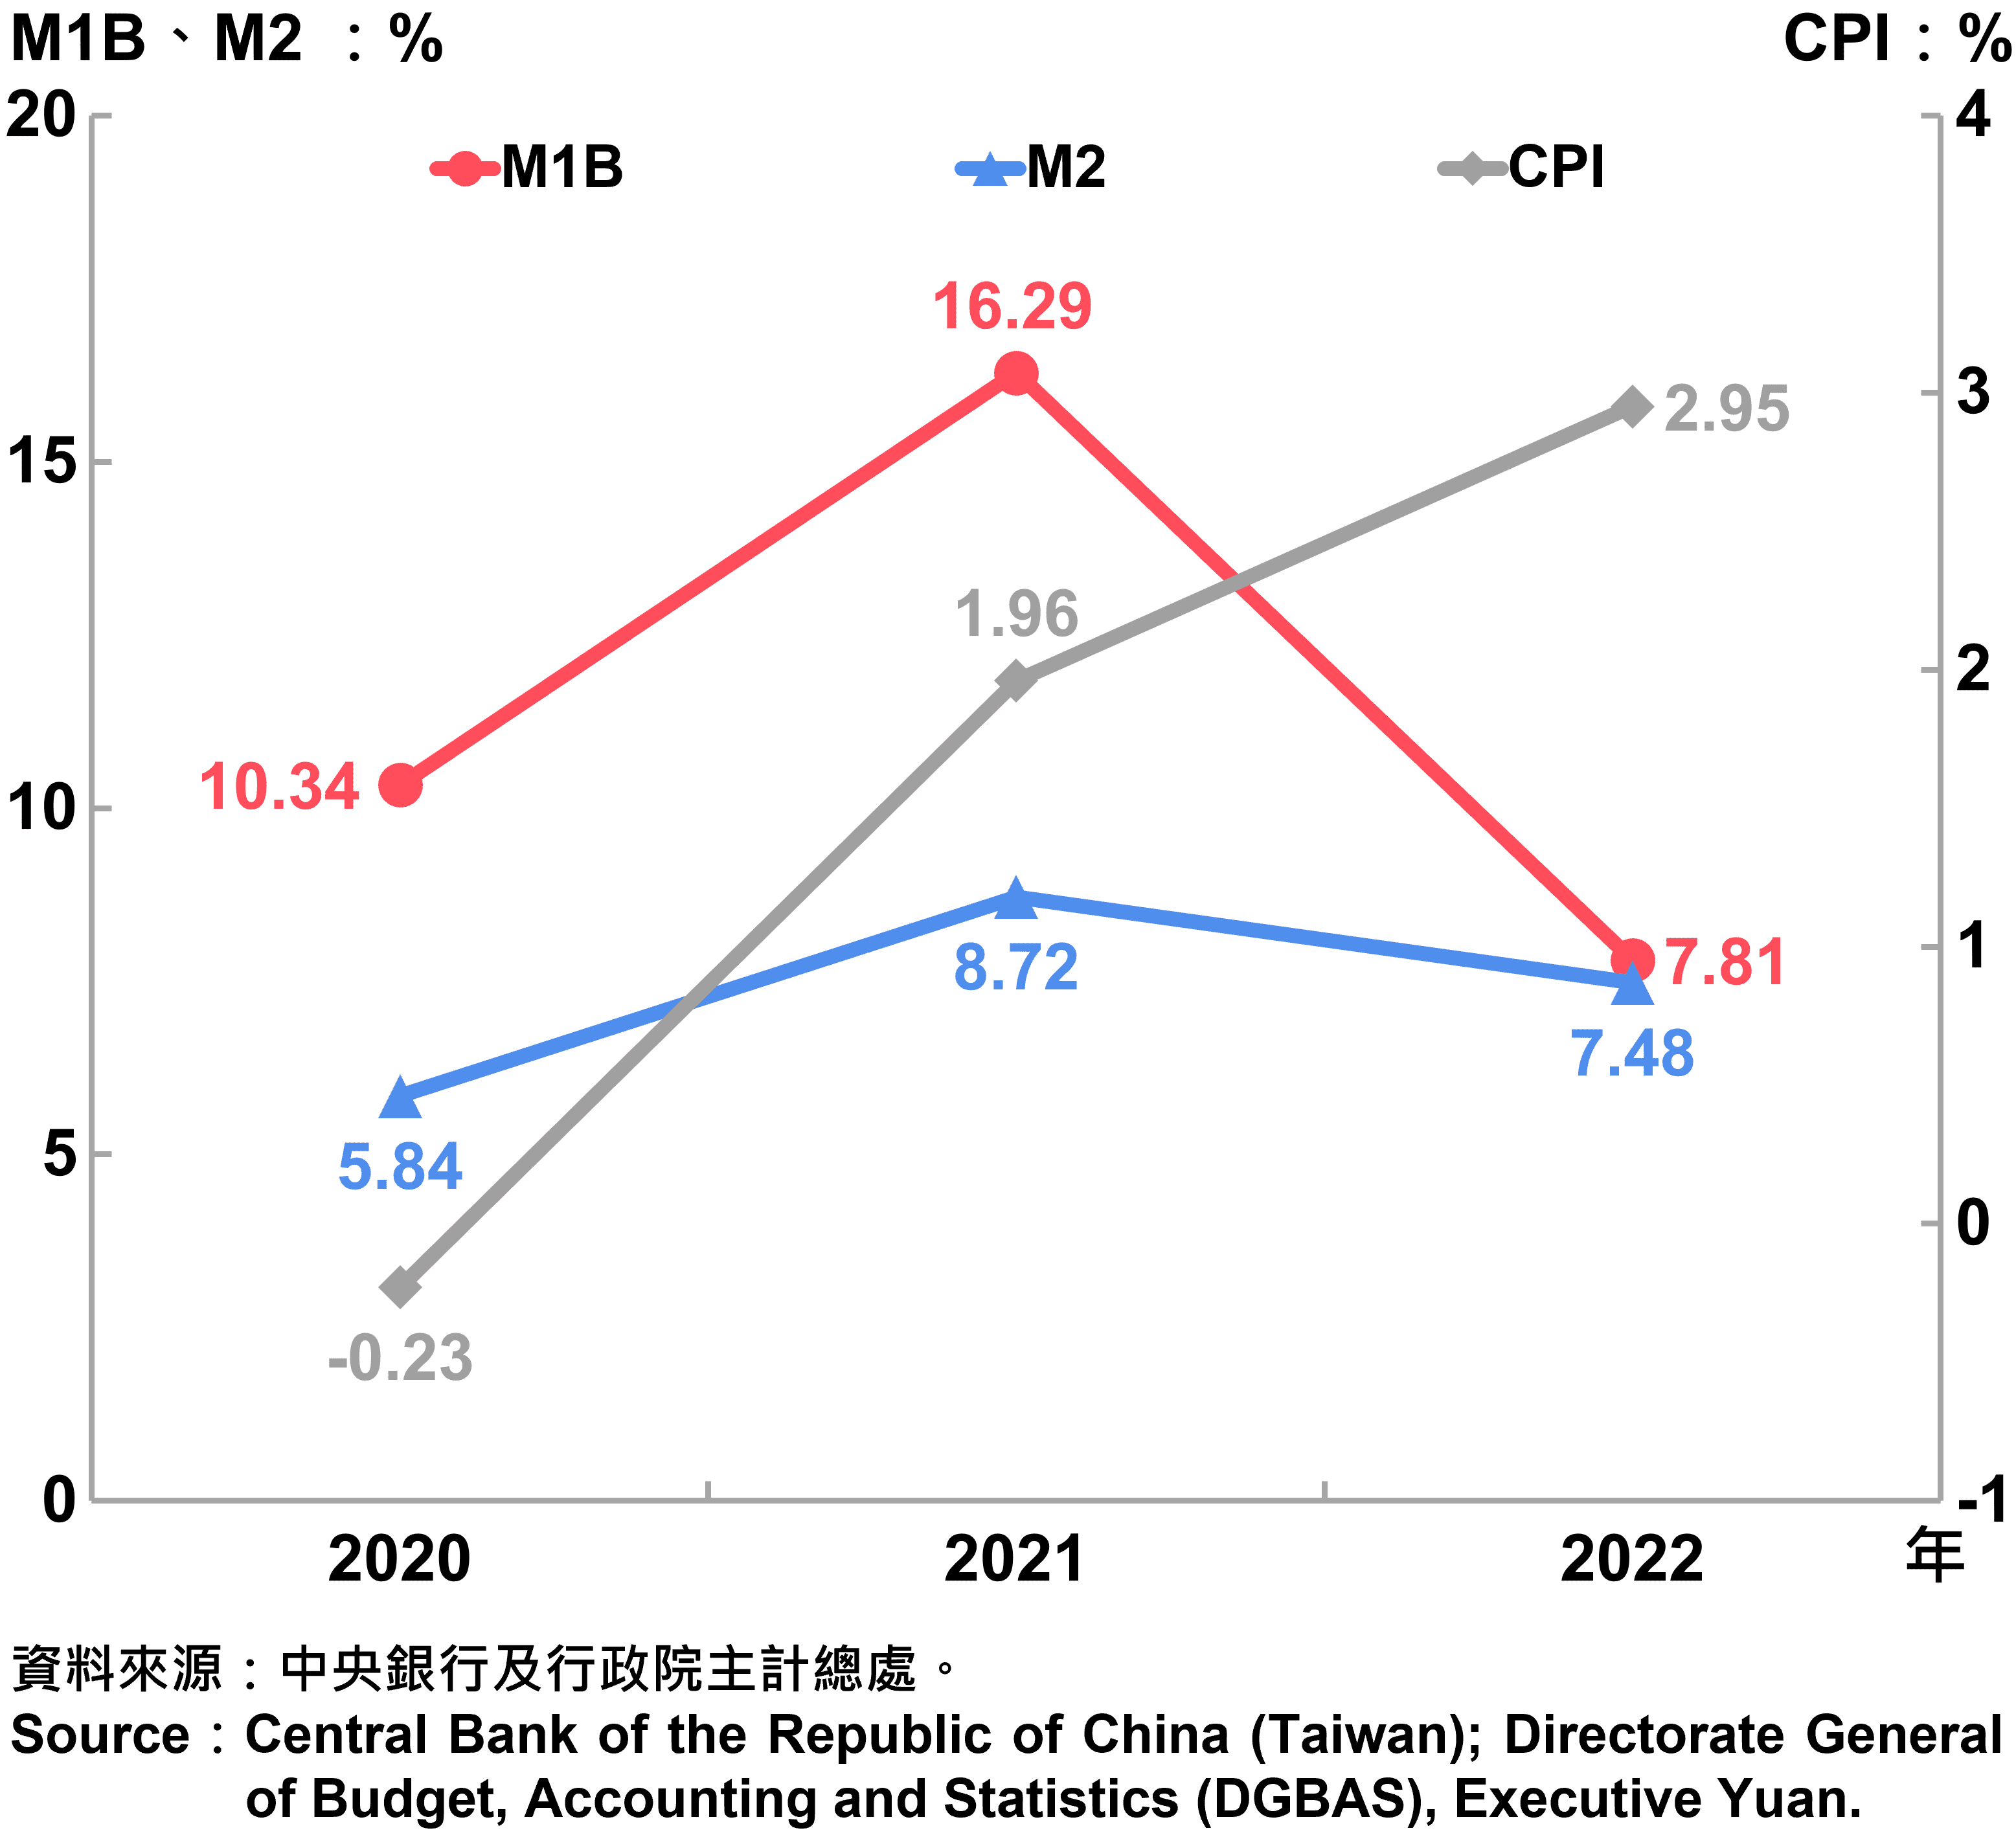 貨幣供給年增率與消費者物價指數（CPI）年增率 Annual Growth Rate of Money Supply and CPI